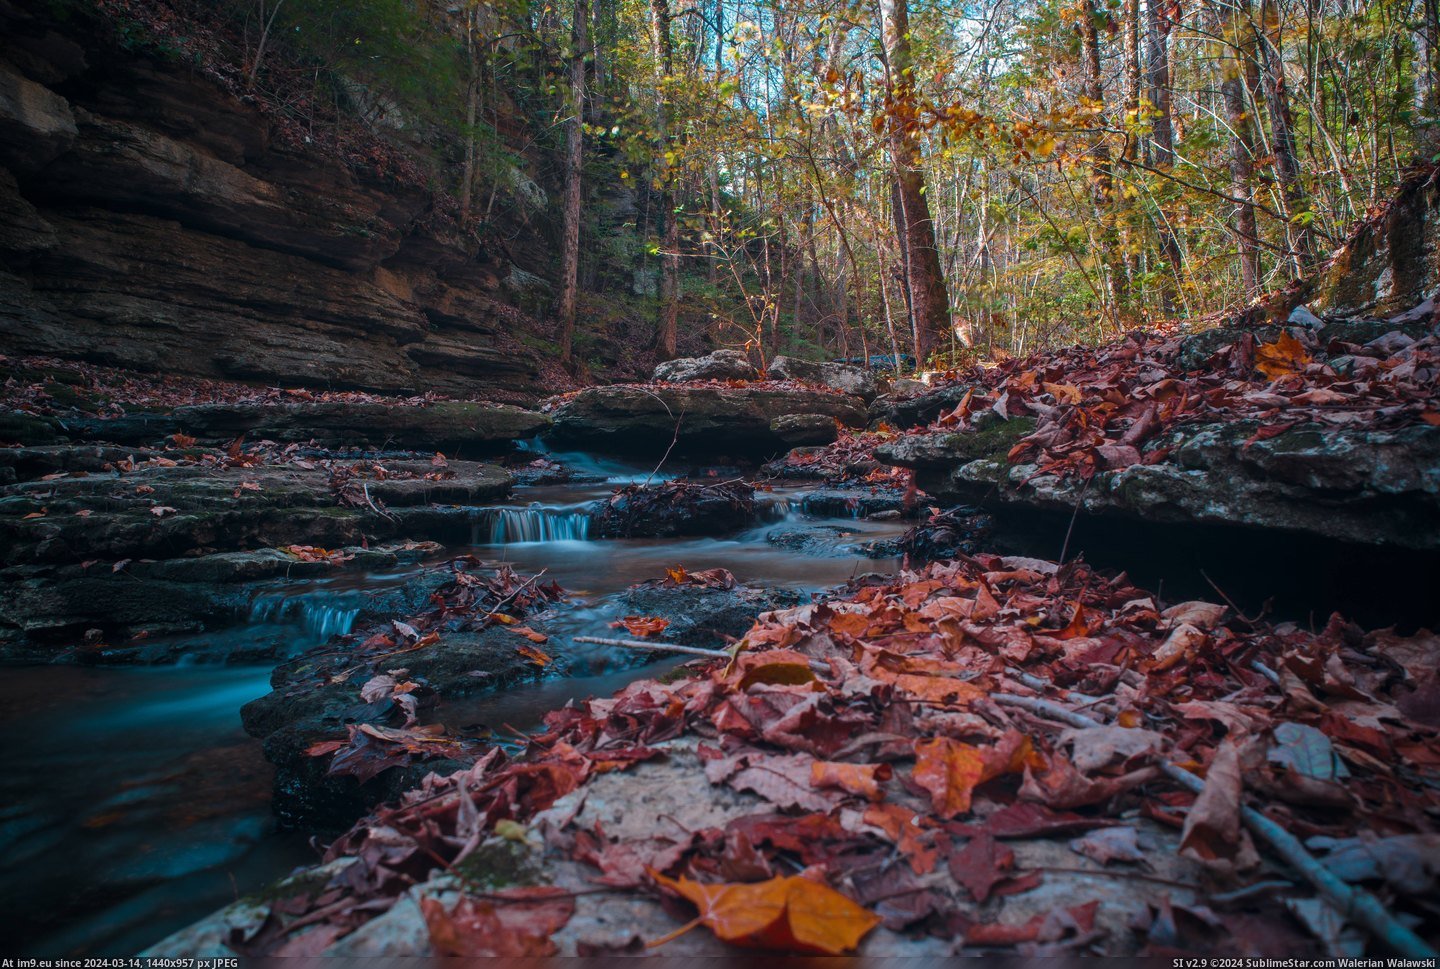 #Secret #Creek #Kentucky #6000x4000 #Location [Earthporn] Creek at a secret location in Kentucky,  [6000x4000] Pic. (Изображение из альбом My r/EARTHPORN favs))